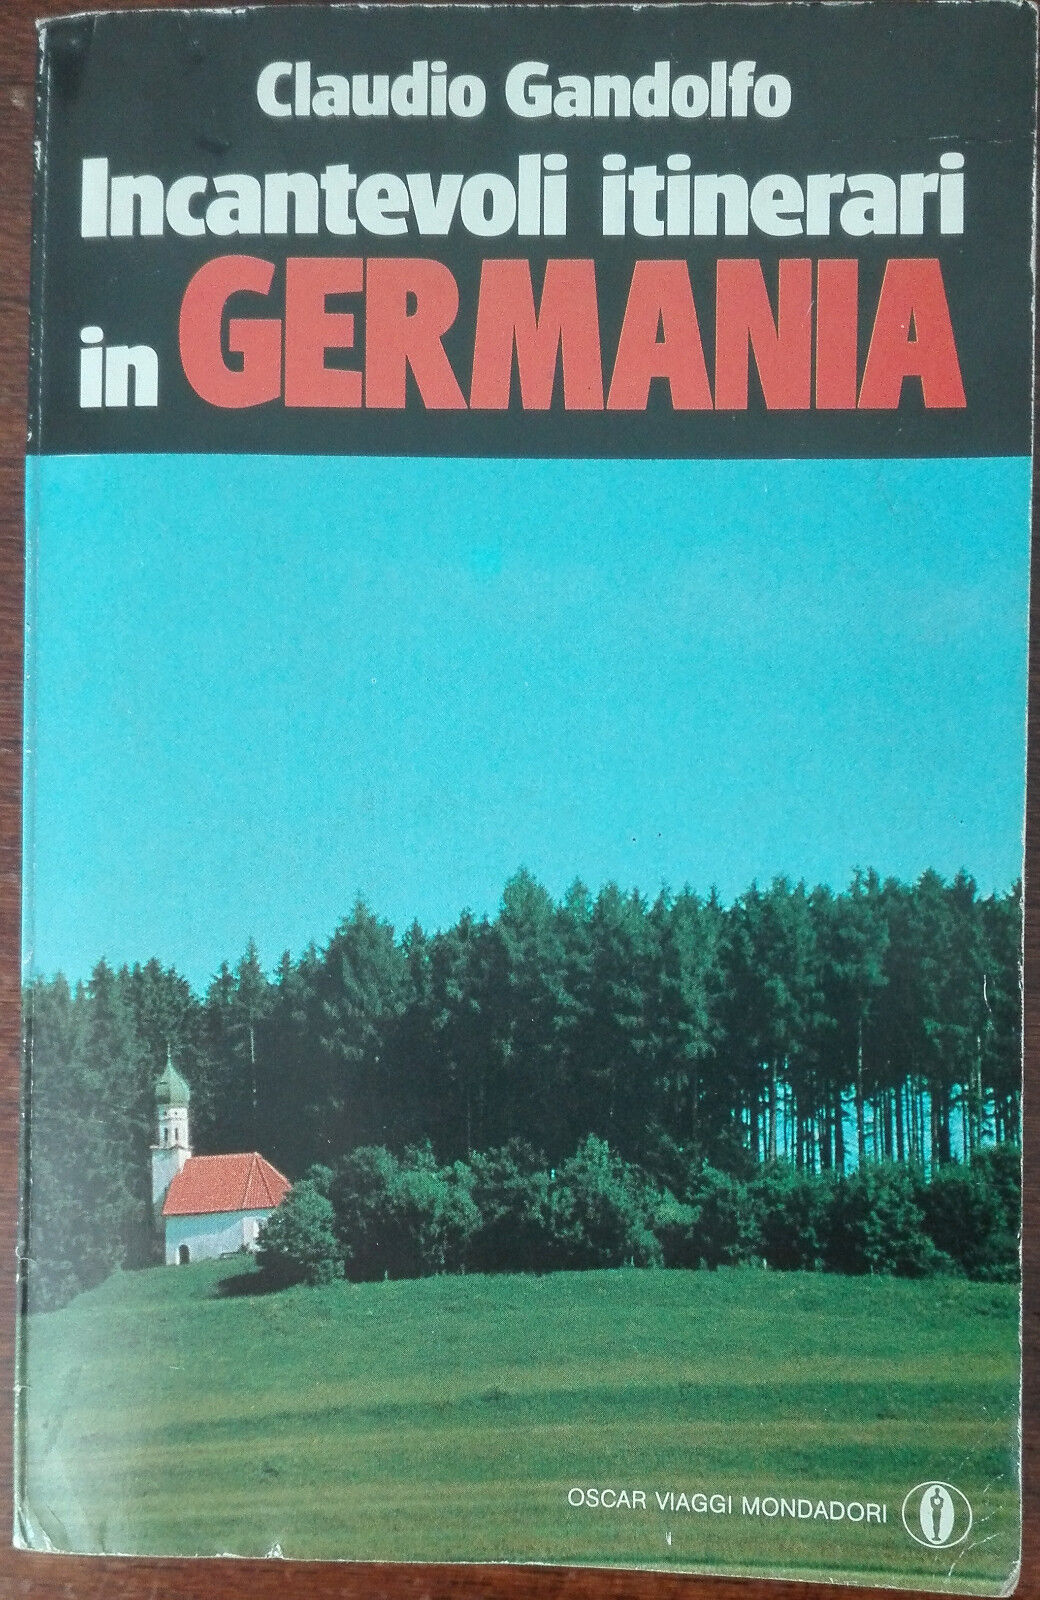 Incantevoli itinerari in Germania - Claudio Gandolfo - Oscar Mondadori,1990 - A